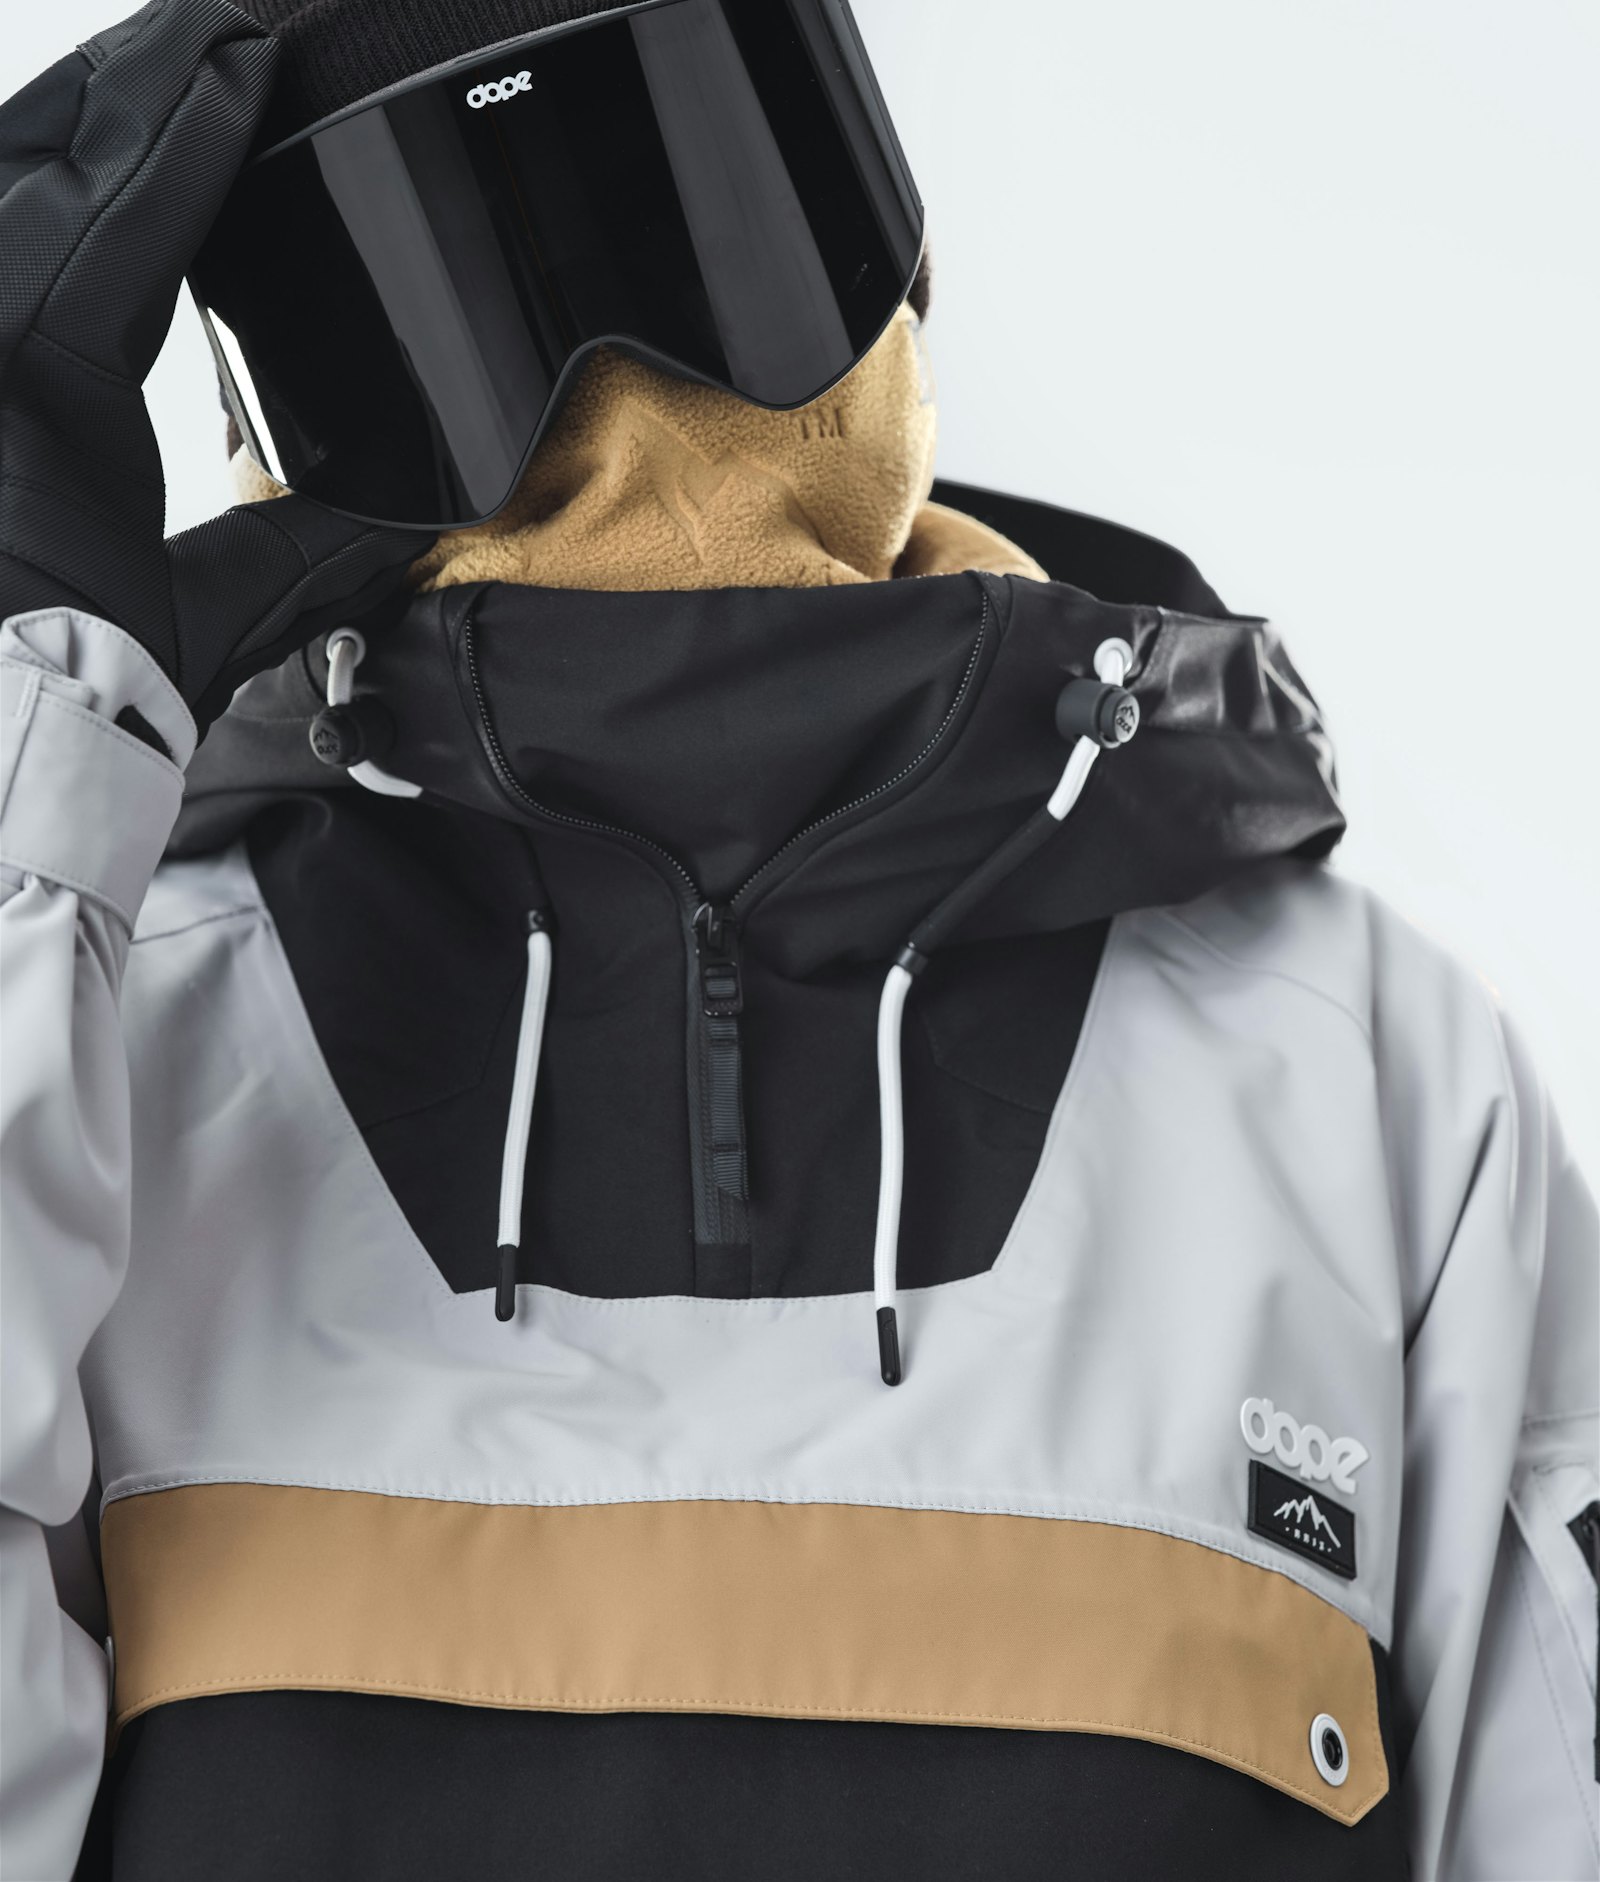 Annok 2020 Snowboard Jacket Men Light Grey/Gold/Black